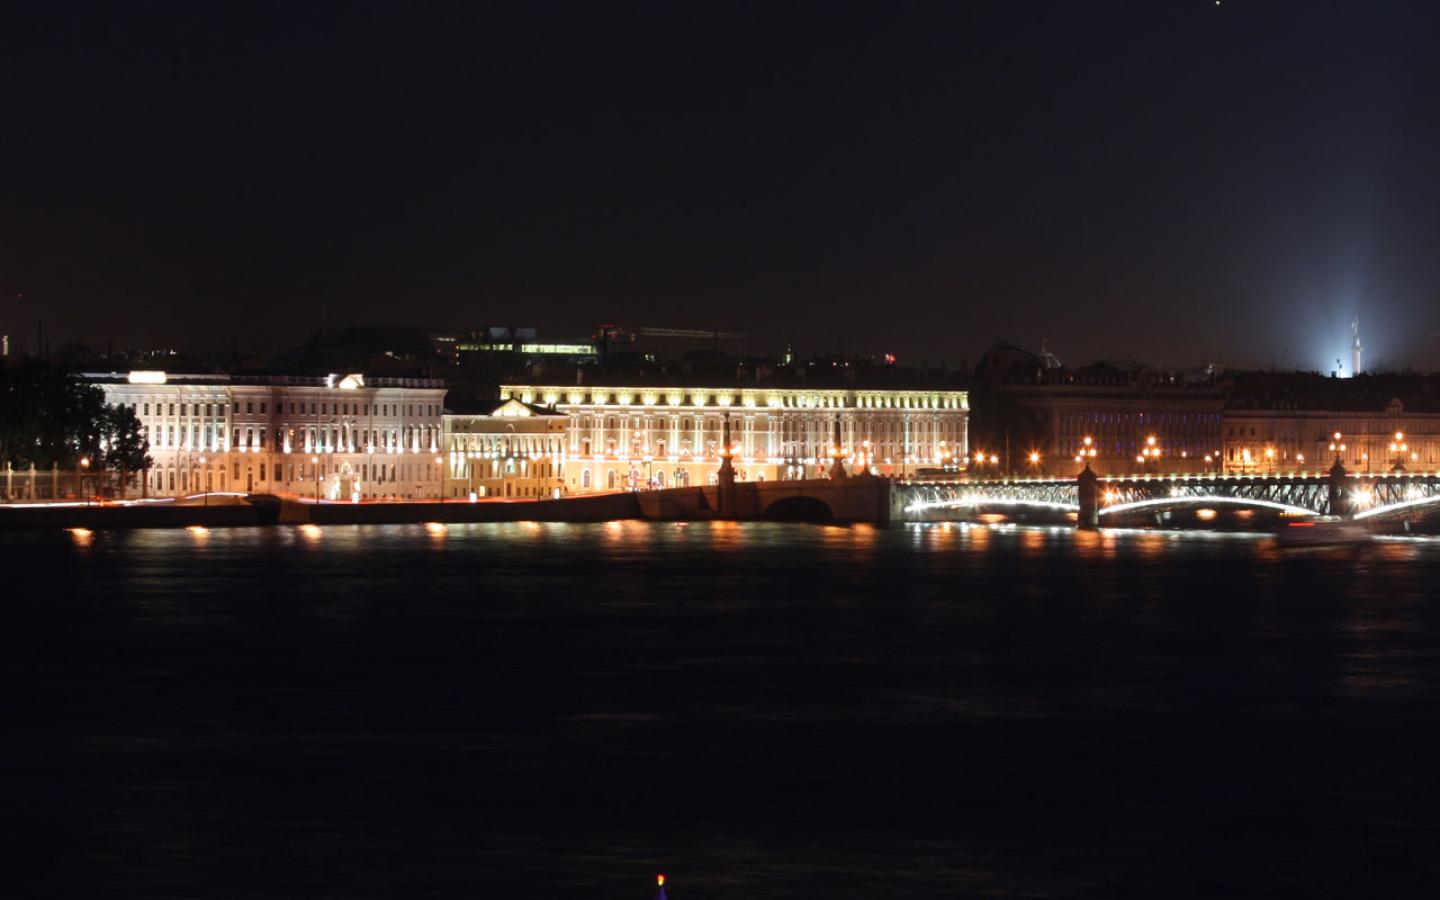 St Petersburg - At night Wallpaper #2 1440 x 900 